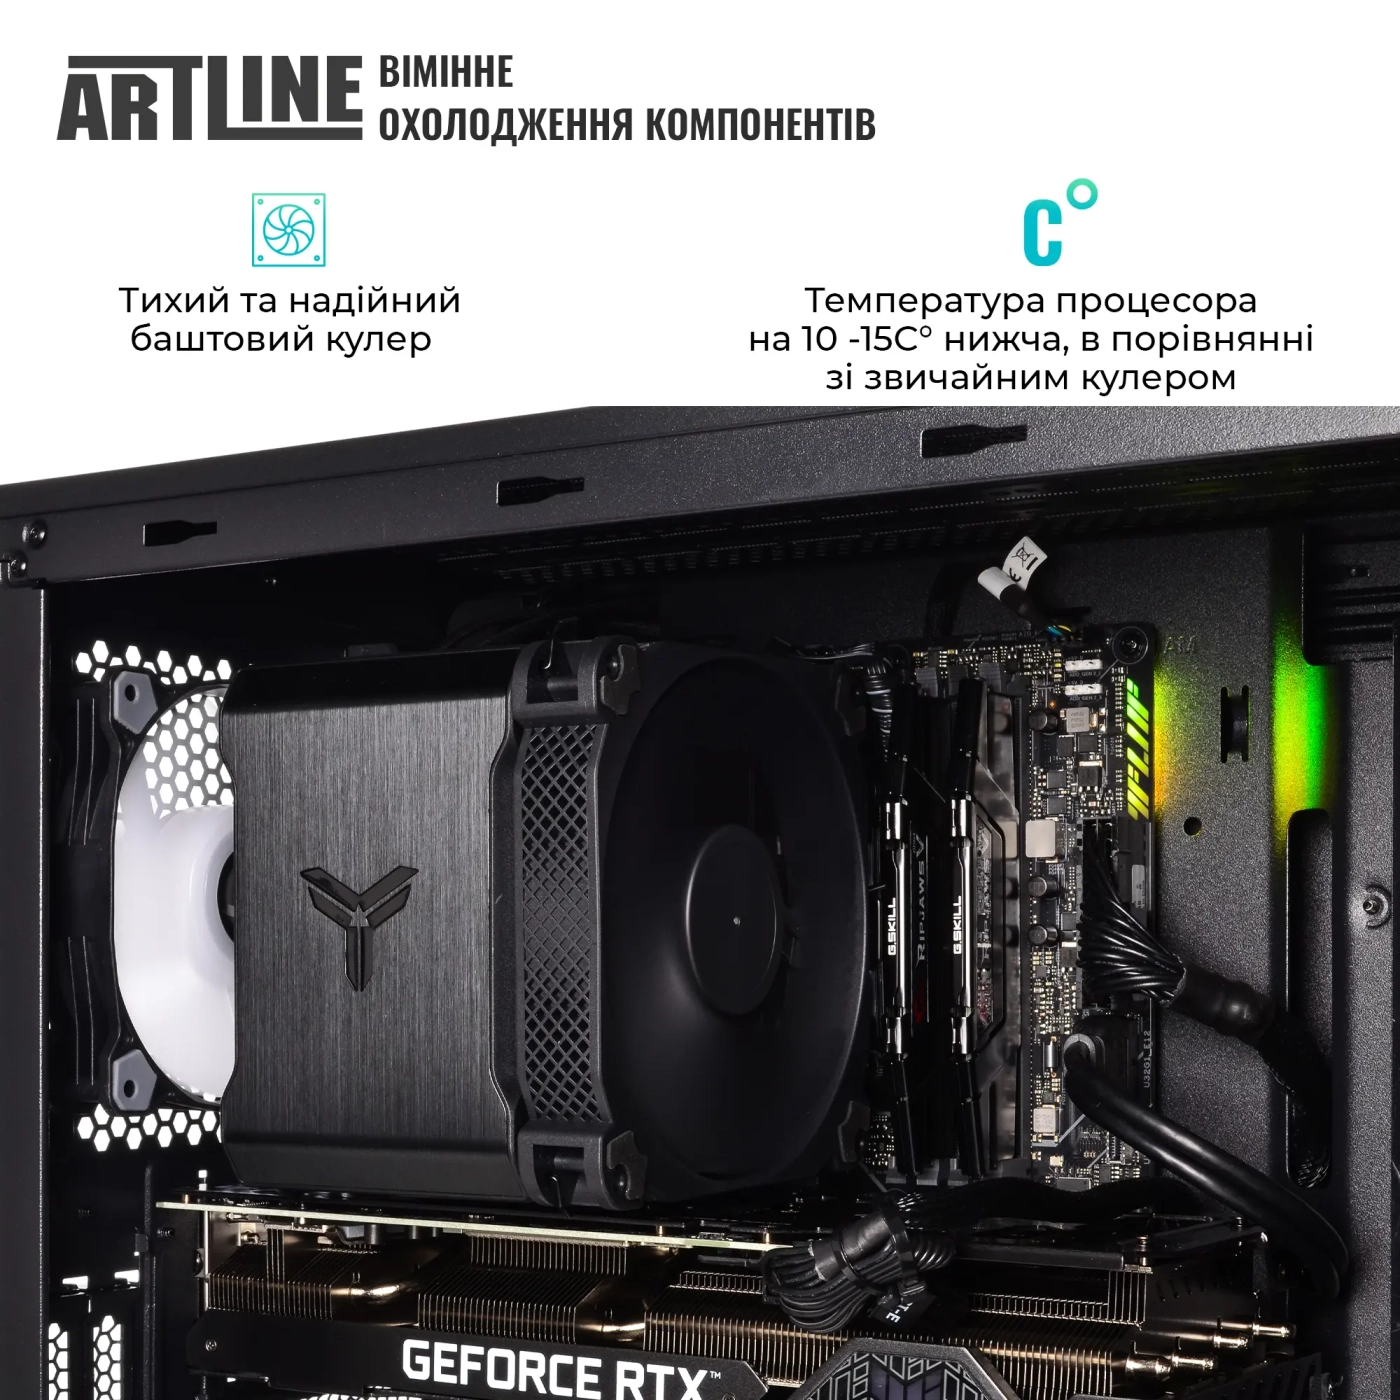 Купить Компьютер ARTLINE Overlord X65 (X65v40) - фото 5